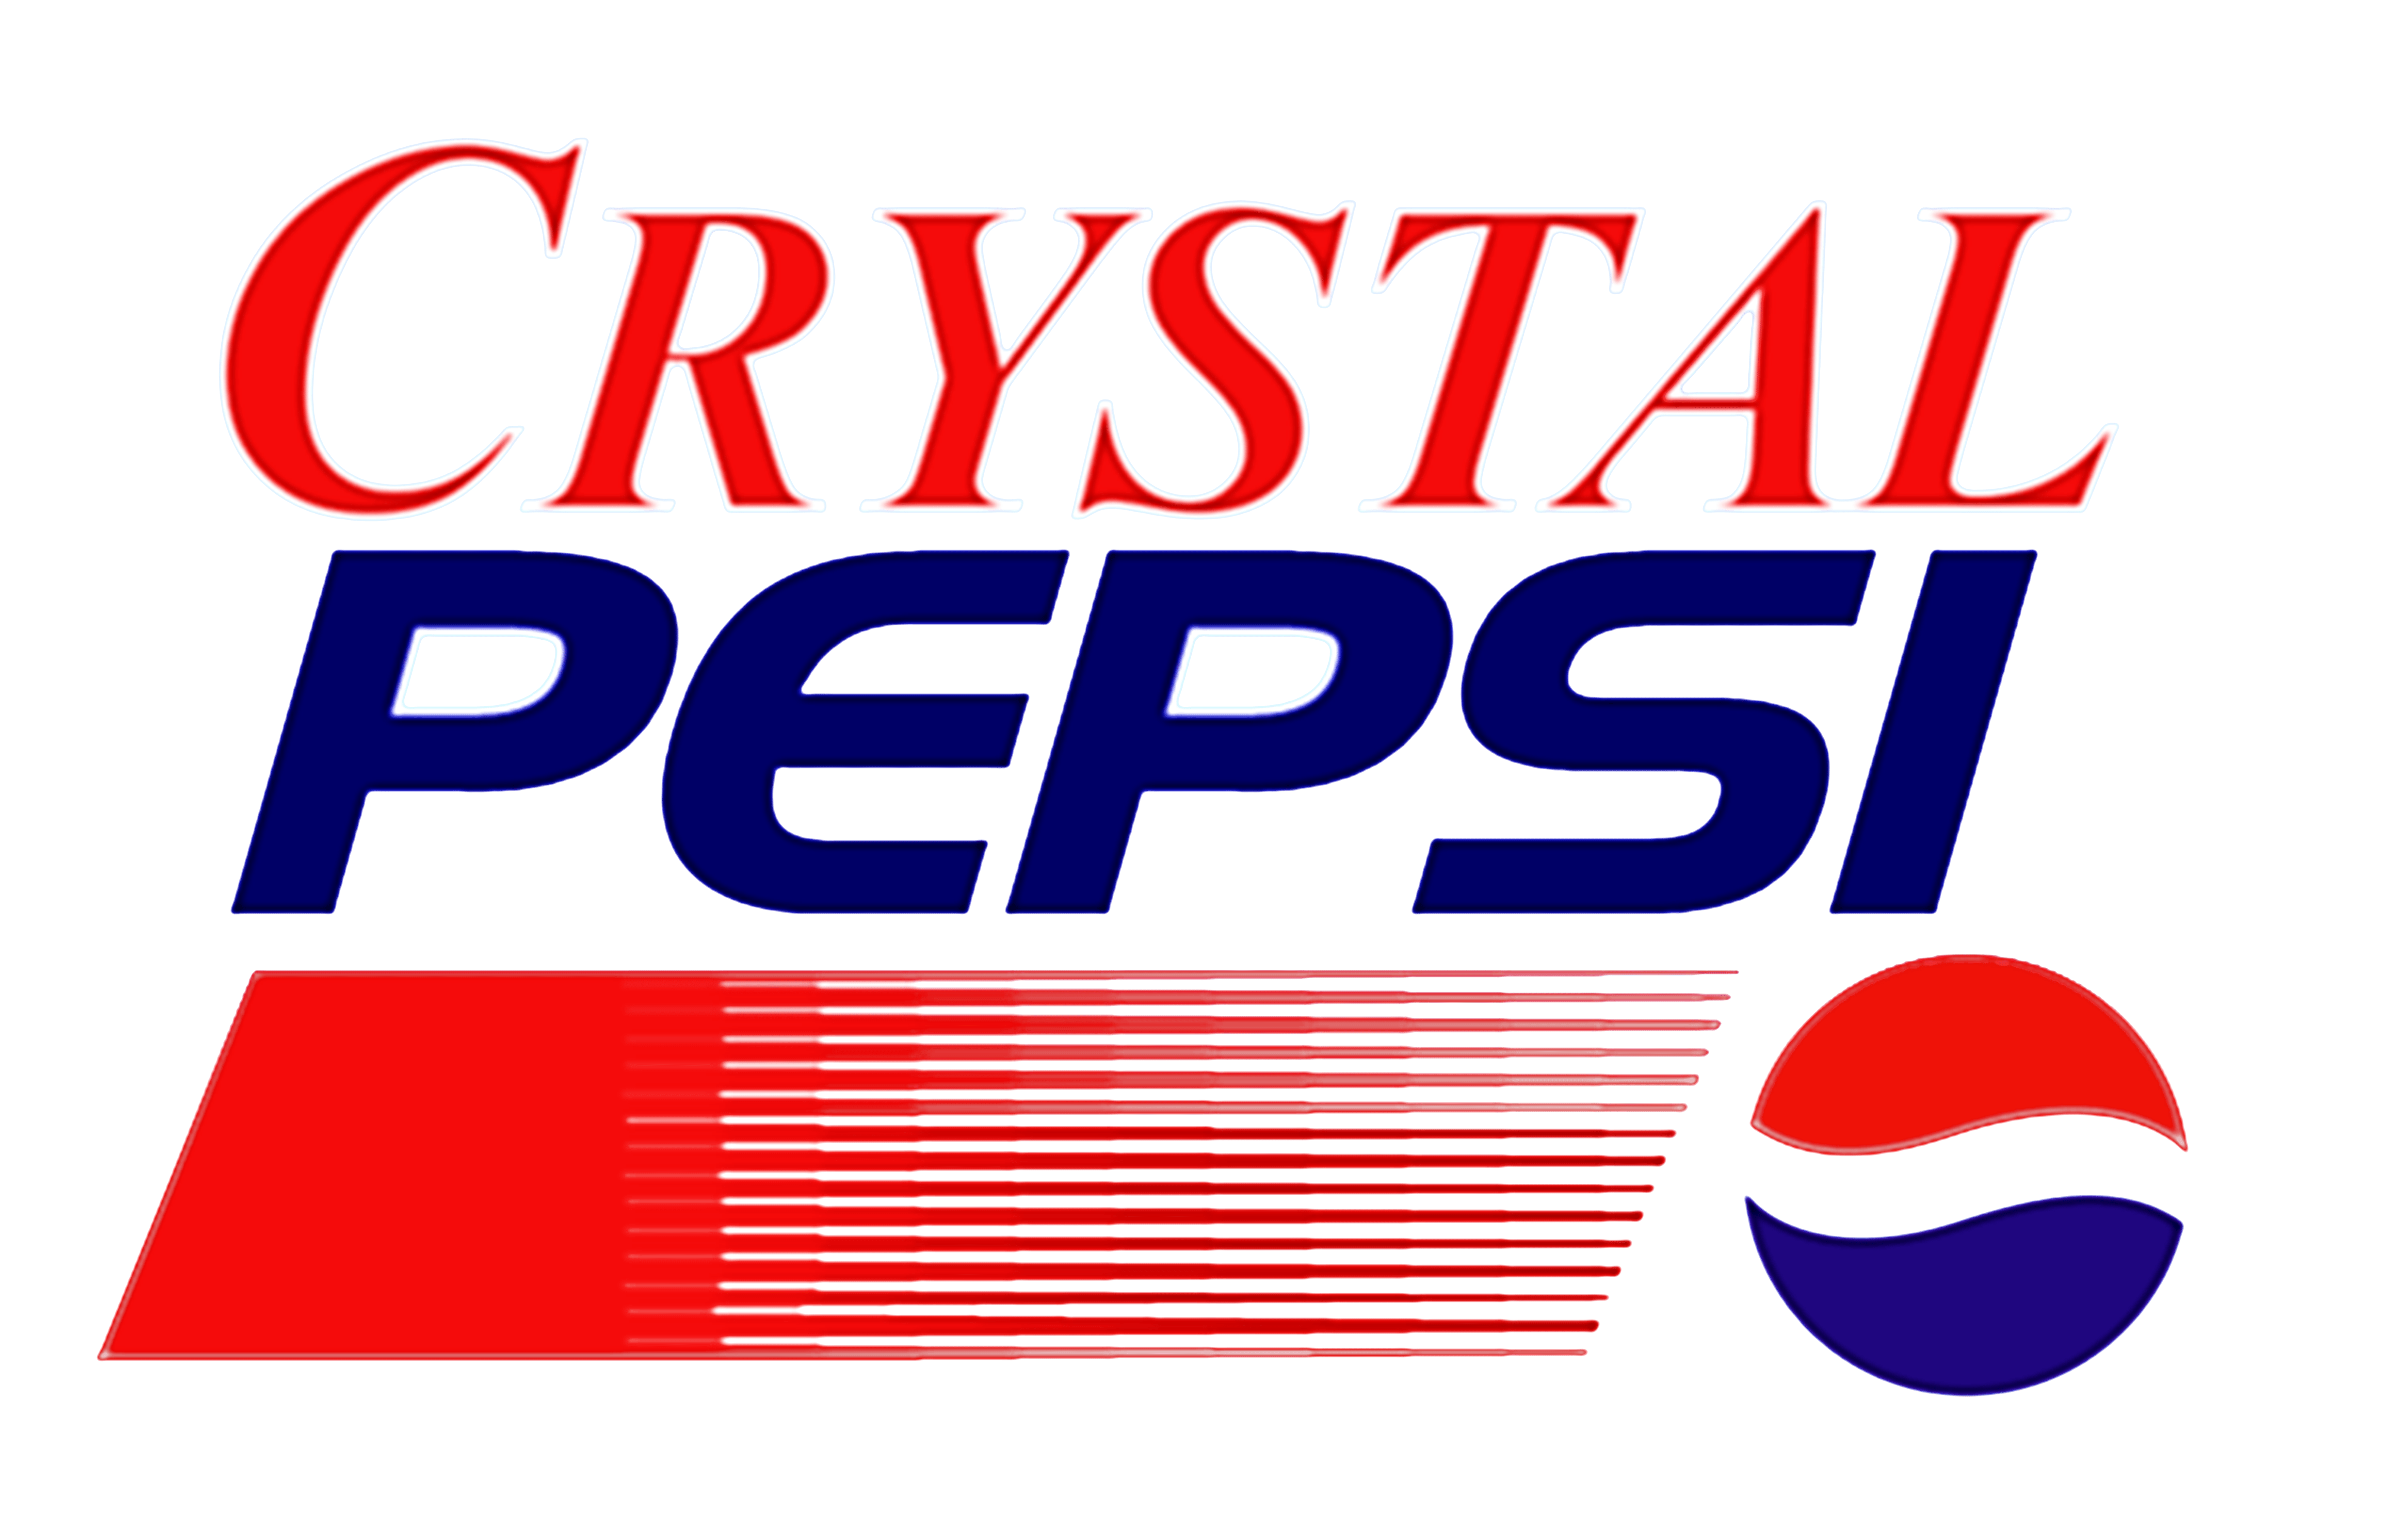 Crystal Logo - Large Transparent Logo | Crystal Pepsi | Know Your Meme